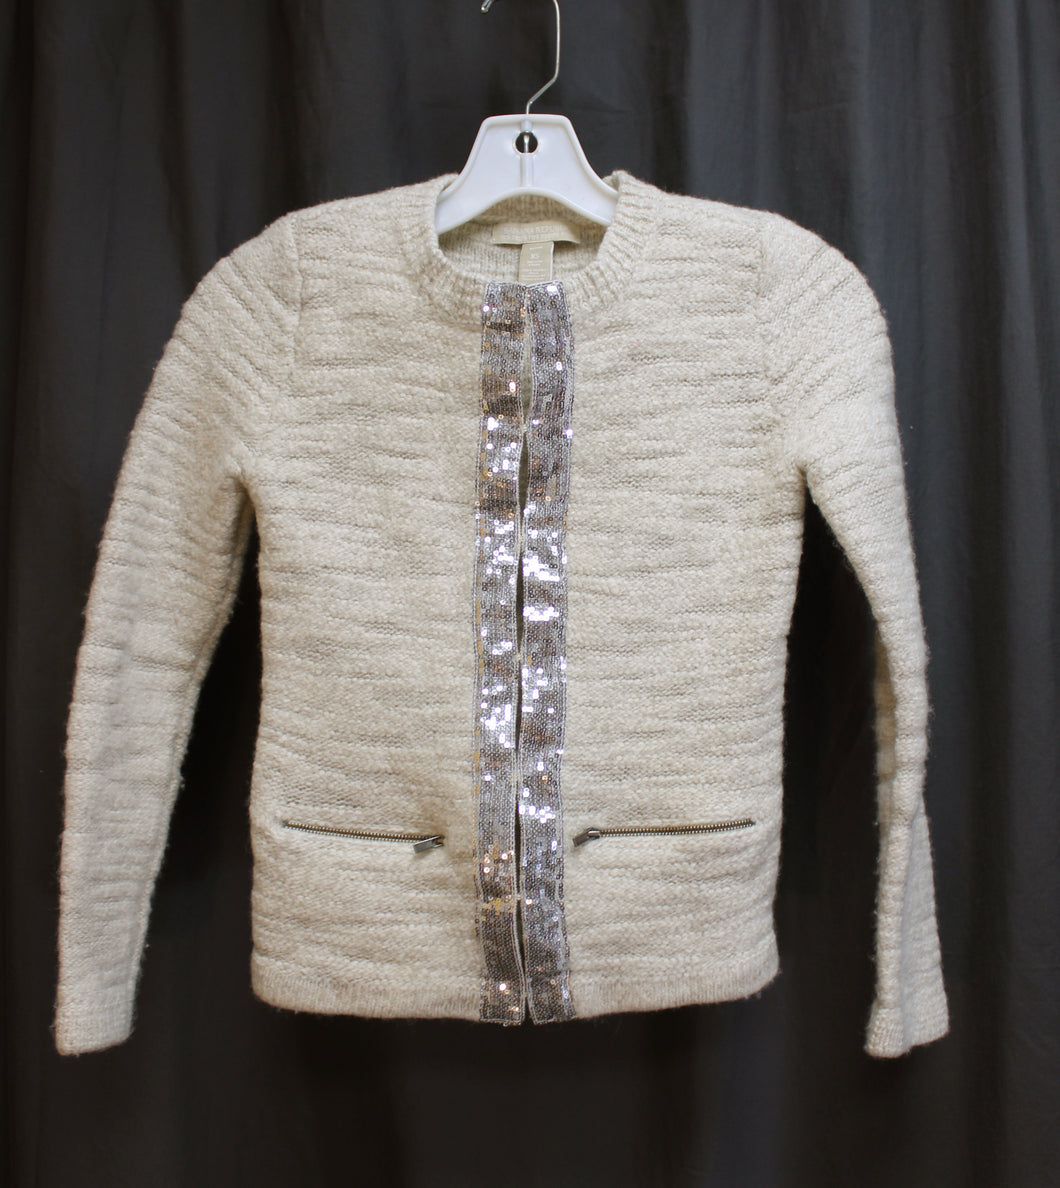 Banana Republic - Natural Merino Wool Knit Cardigan w/ Silver Sequins Cardigan - Size XS